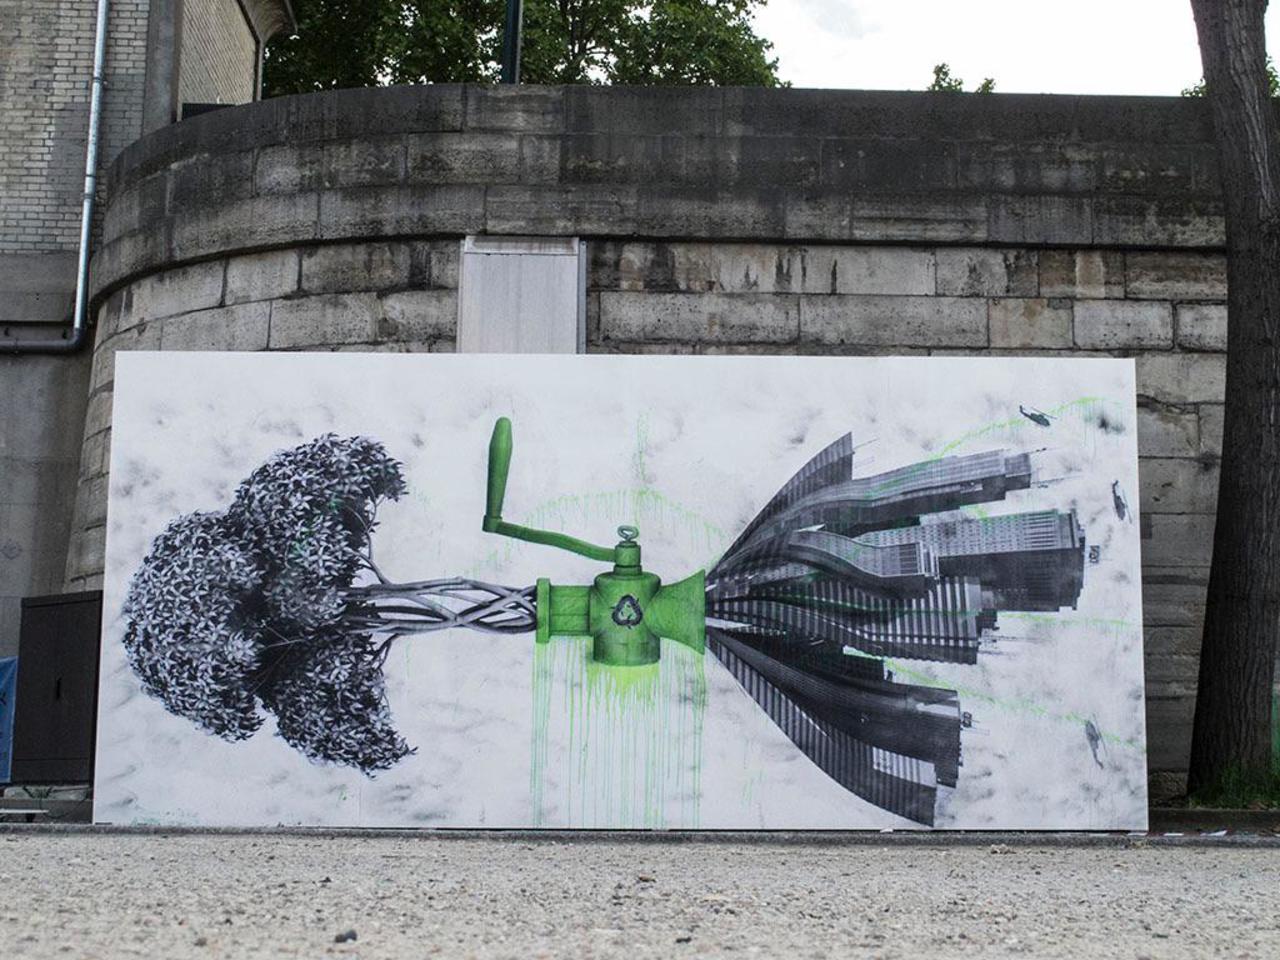 RT @QueGraffiti: El artista Ludo crea dos nuevas piezas de street art en París, Francia #streetart #mural #graffiti #art http://t.co/i5RuVMucPQ